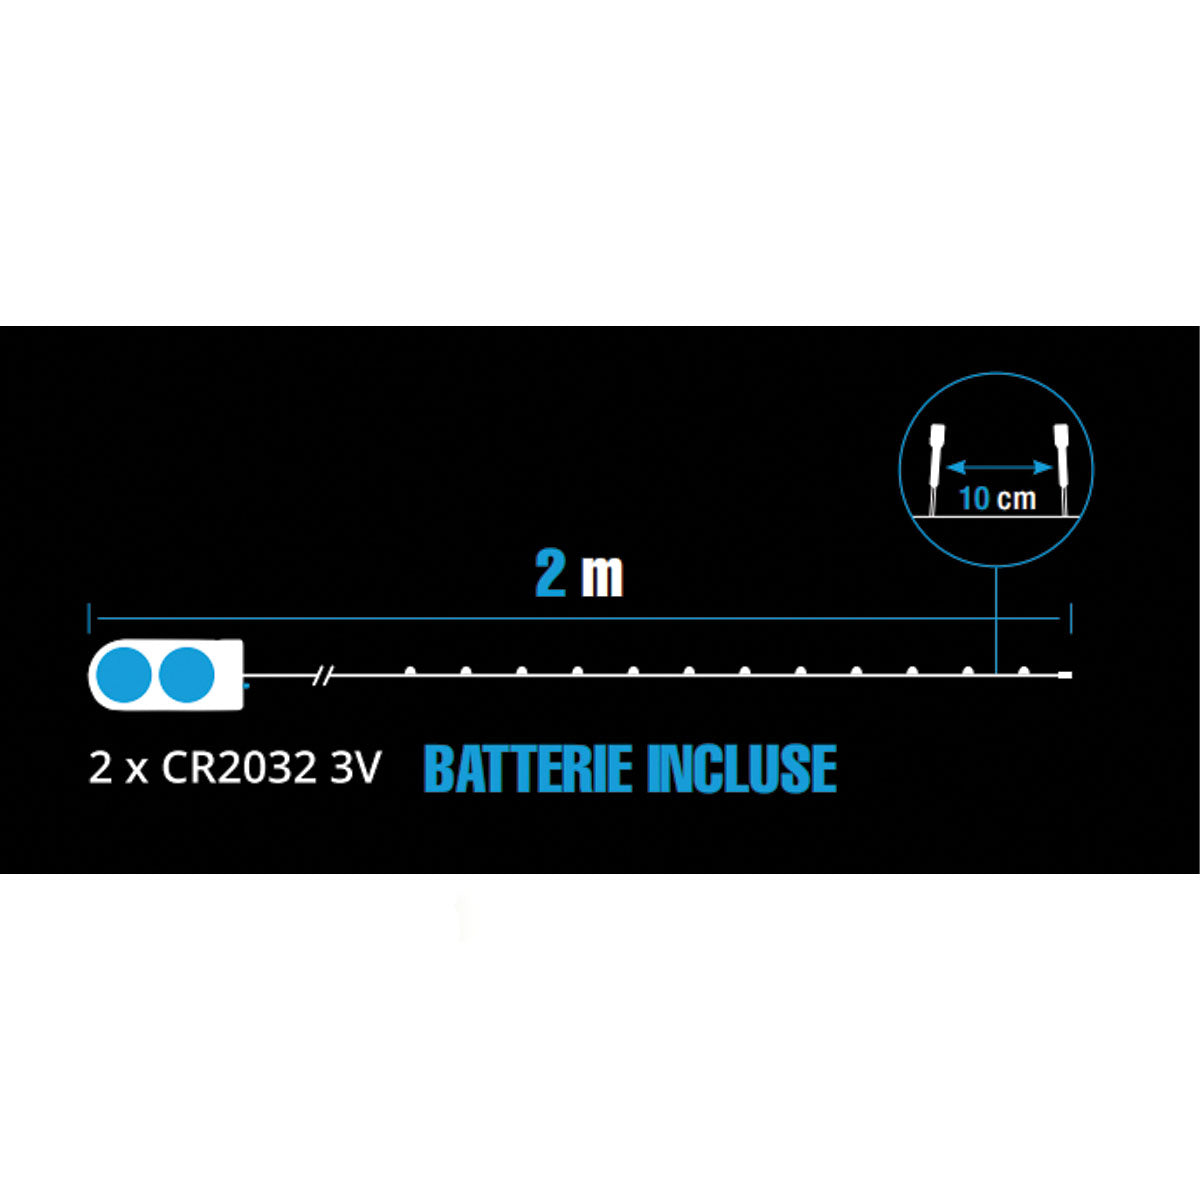 20 Microled Slim Battery 2M Uso Interno